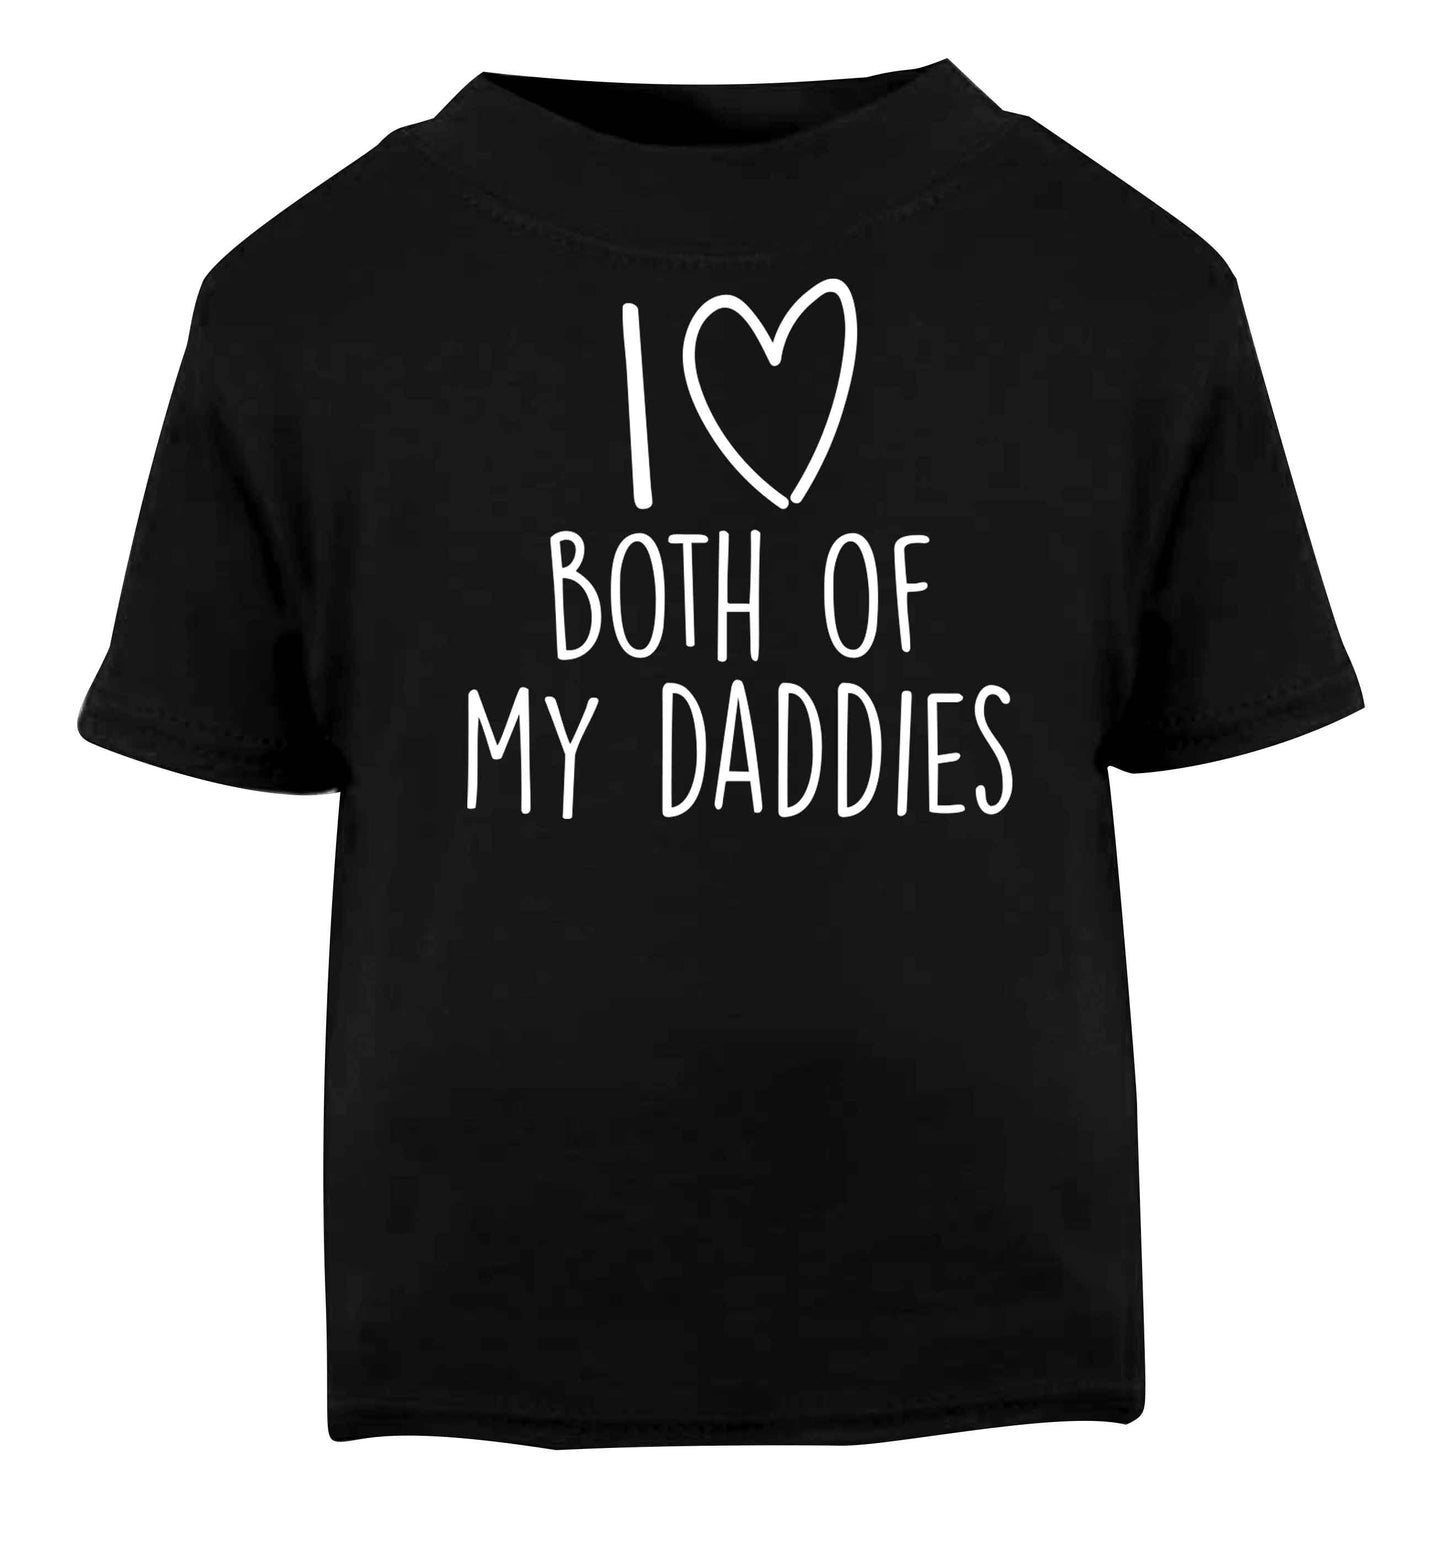 I love both of my daddies Black baby toddler Tshirt 2 years